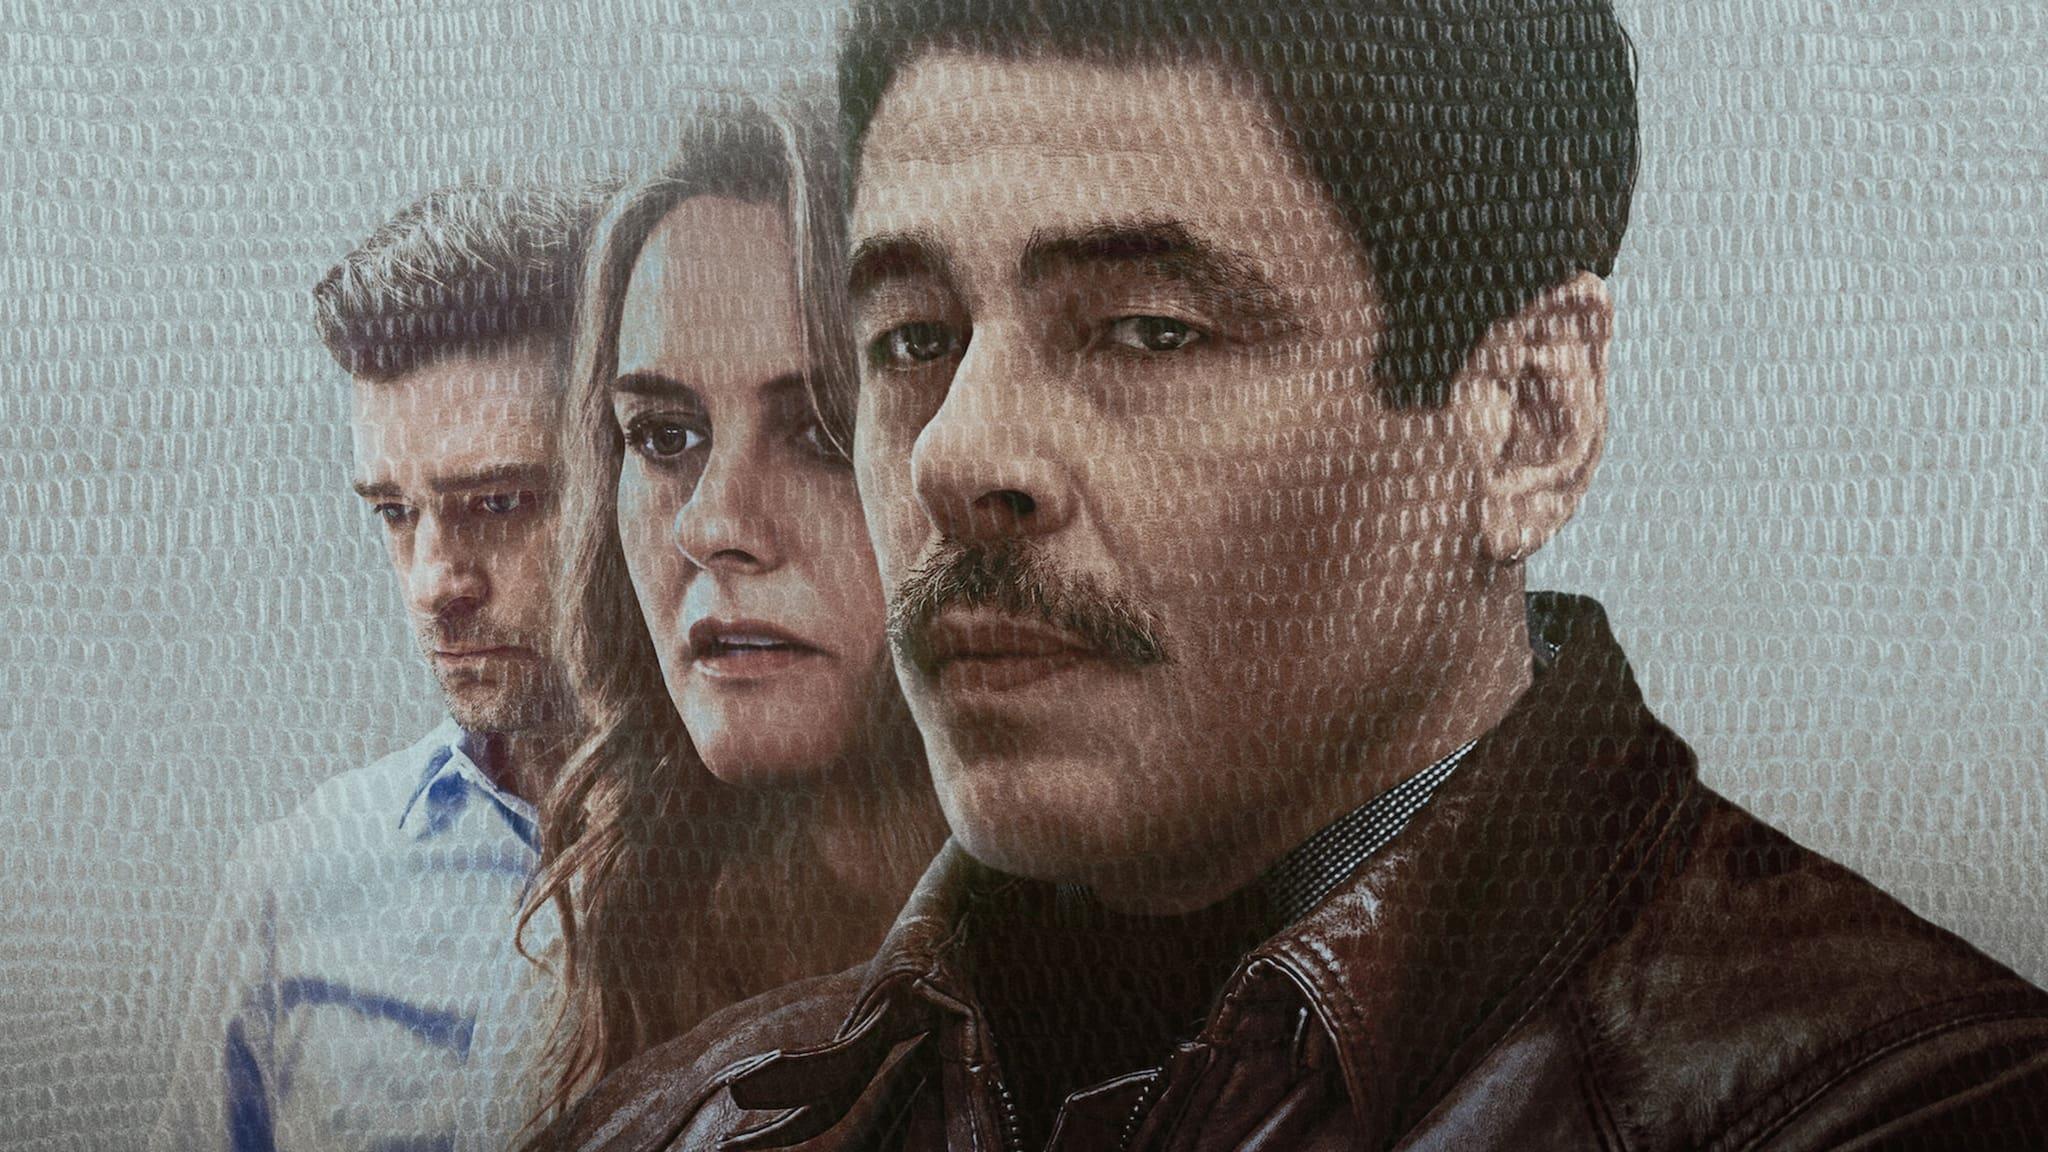 Benicio del Toro backdrop